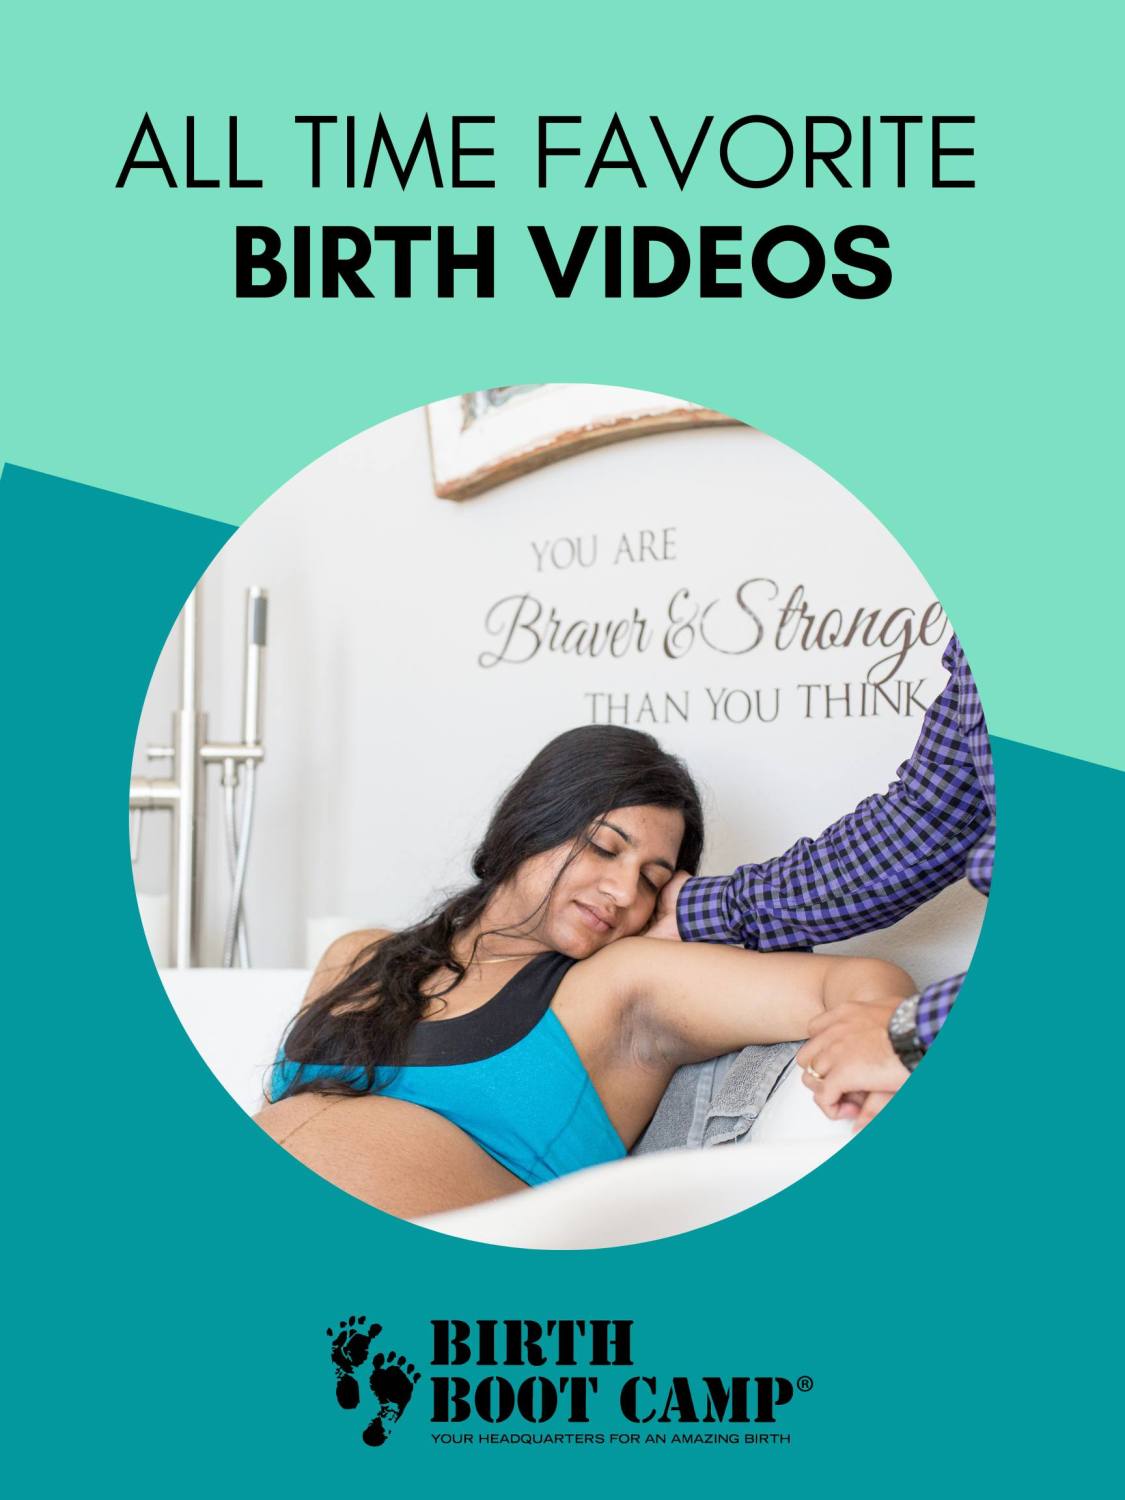 All Time Favorite Birth Videos